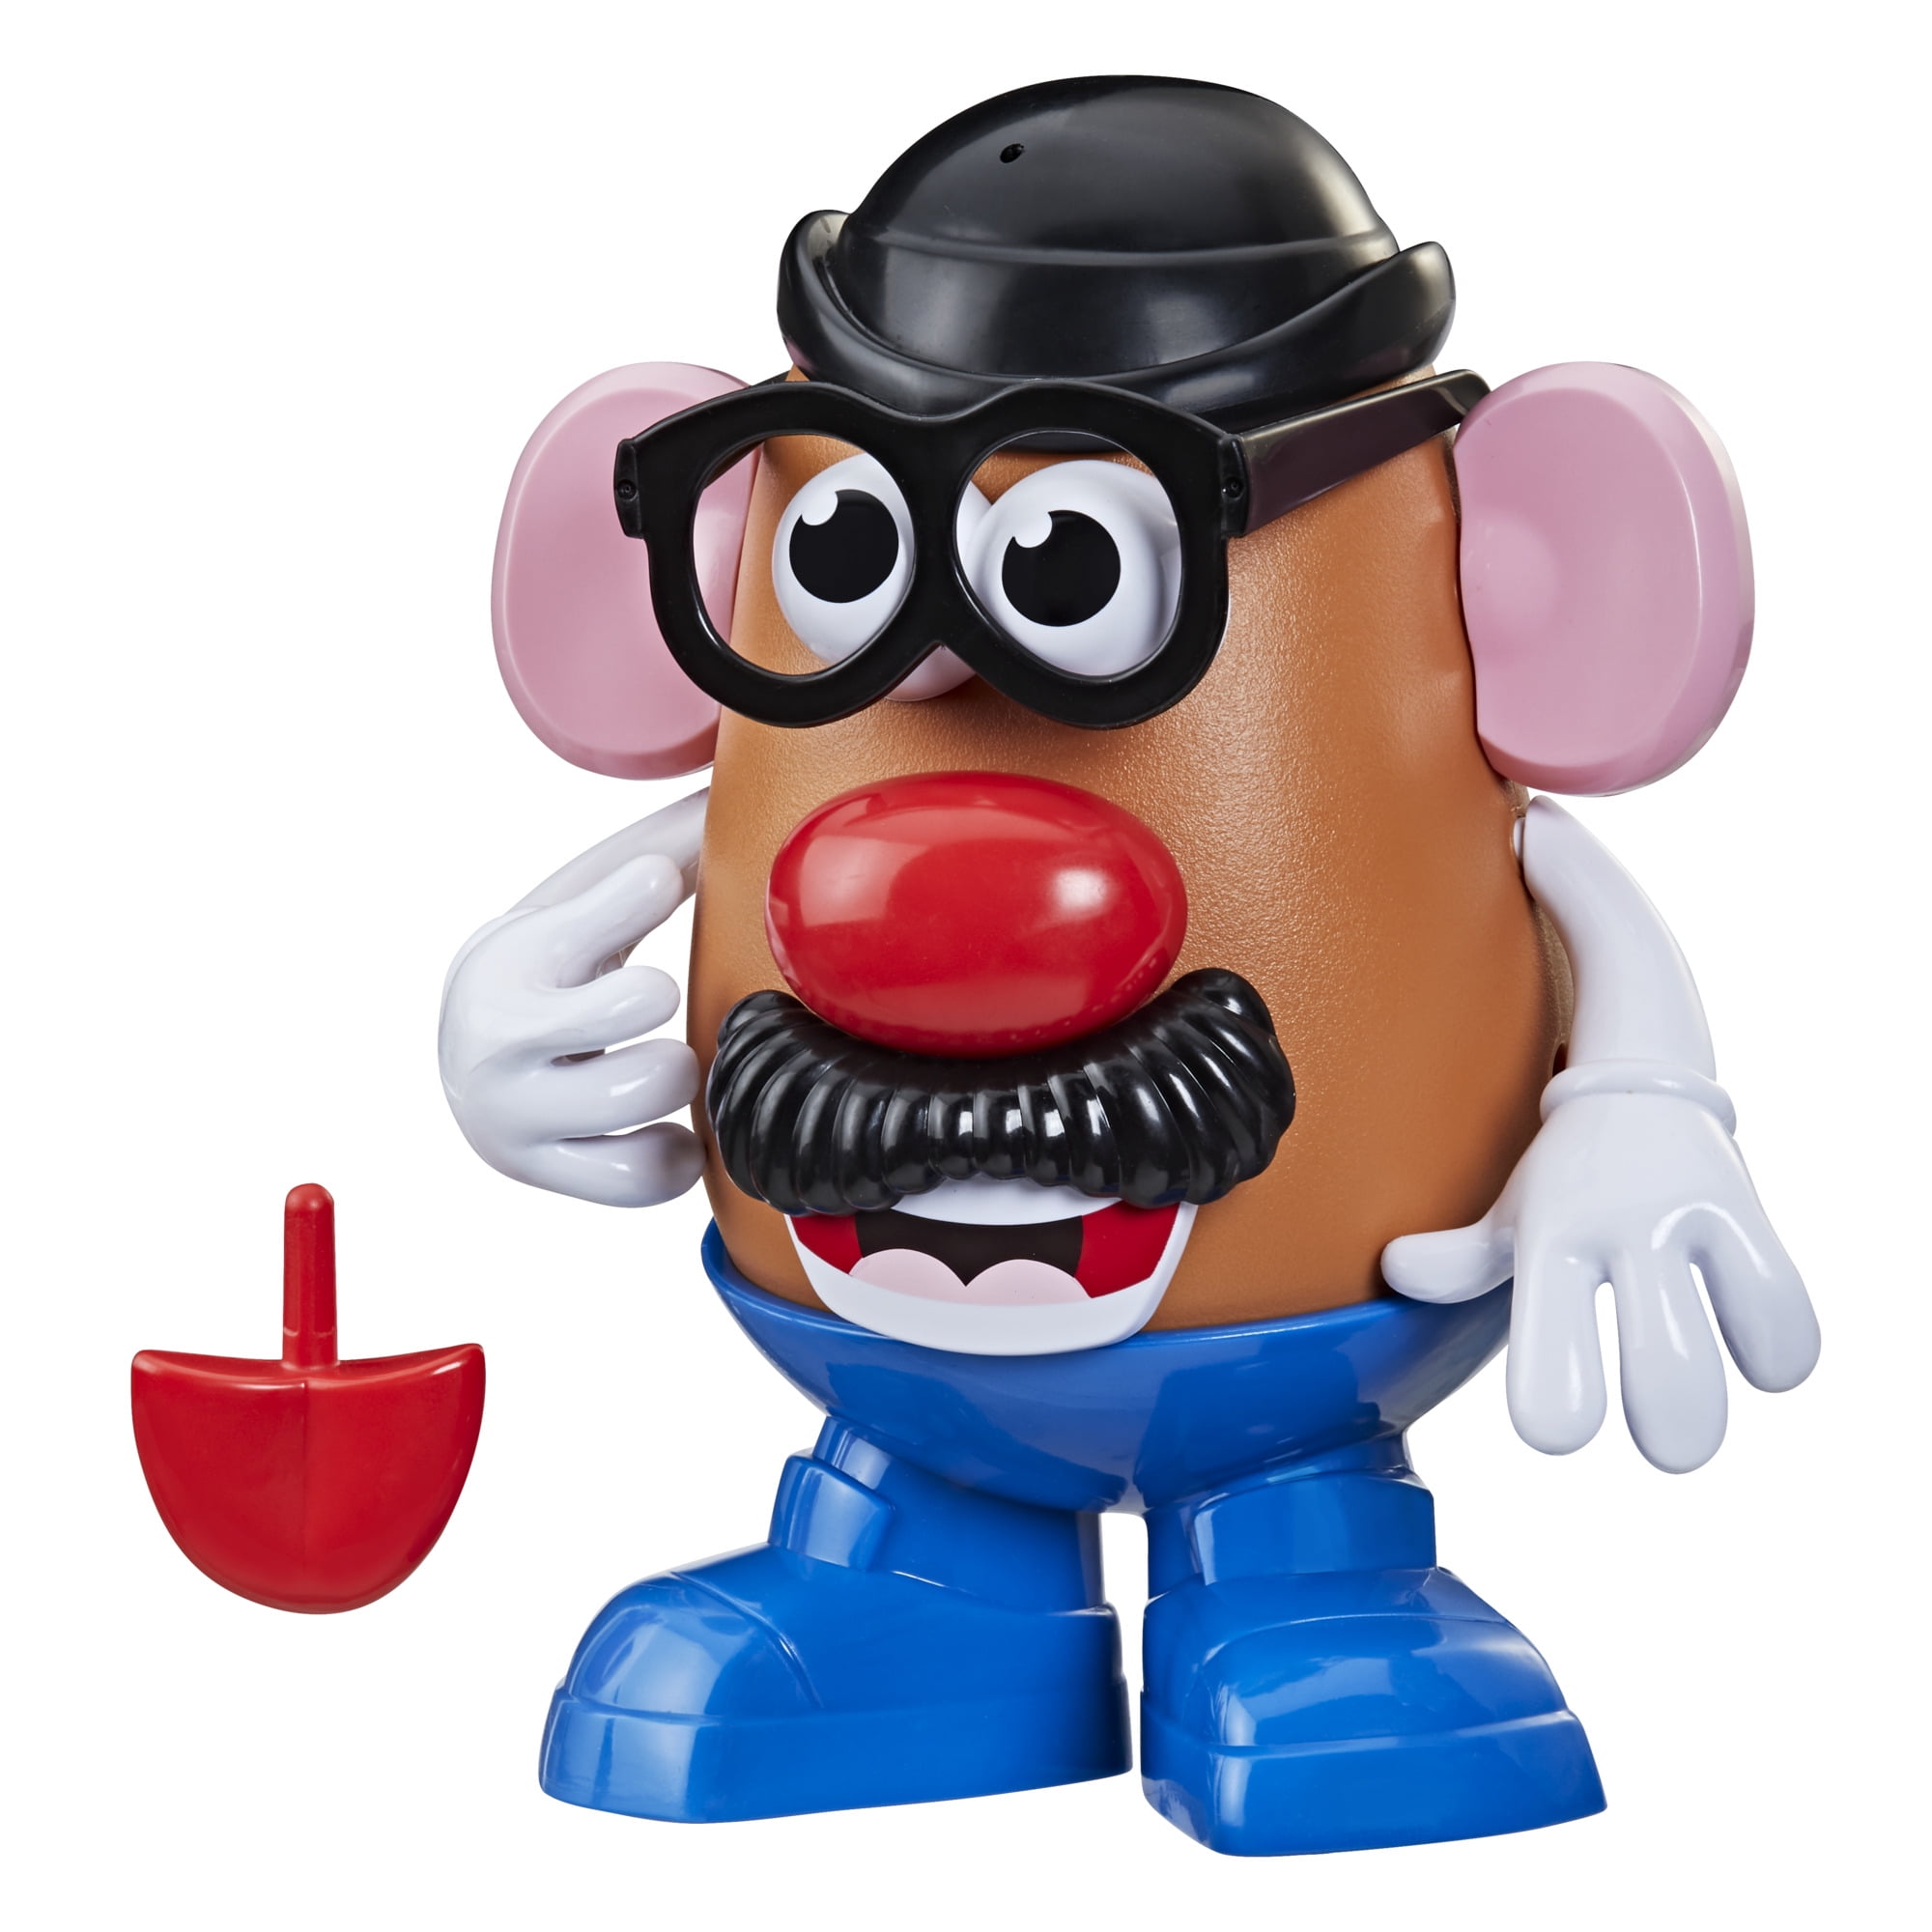 Potato Head Figure for sale online Hasbro Playskool Friends Mr 